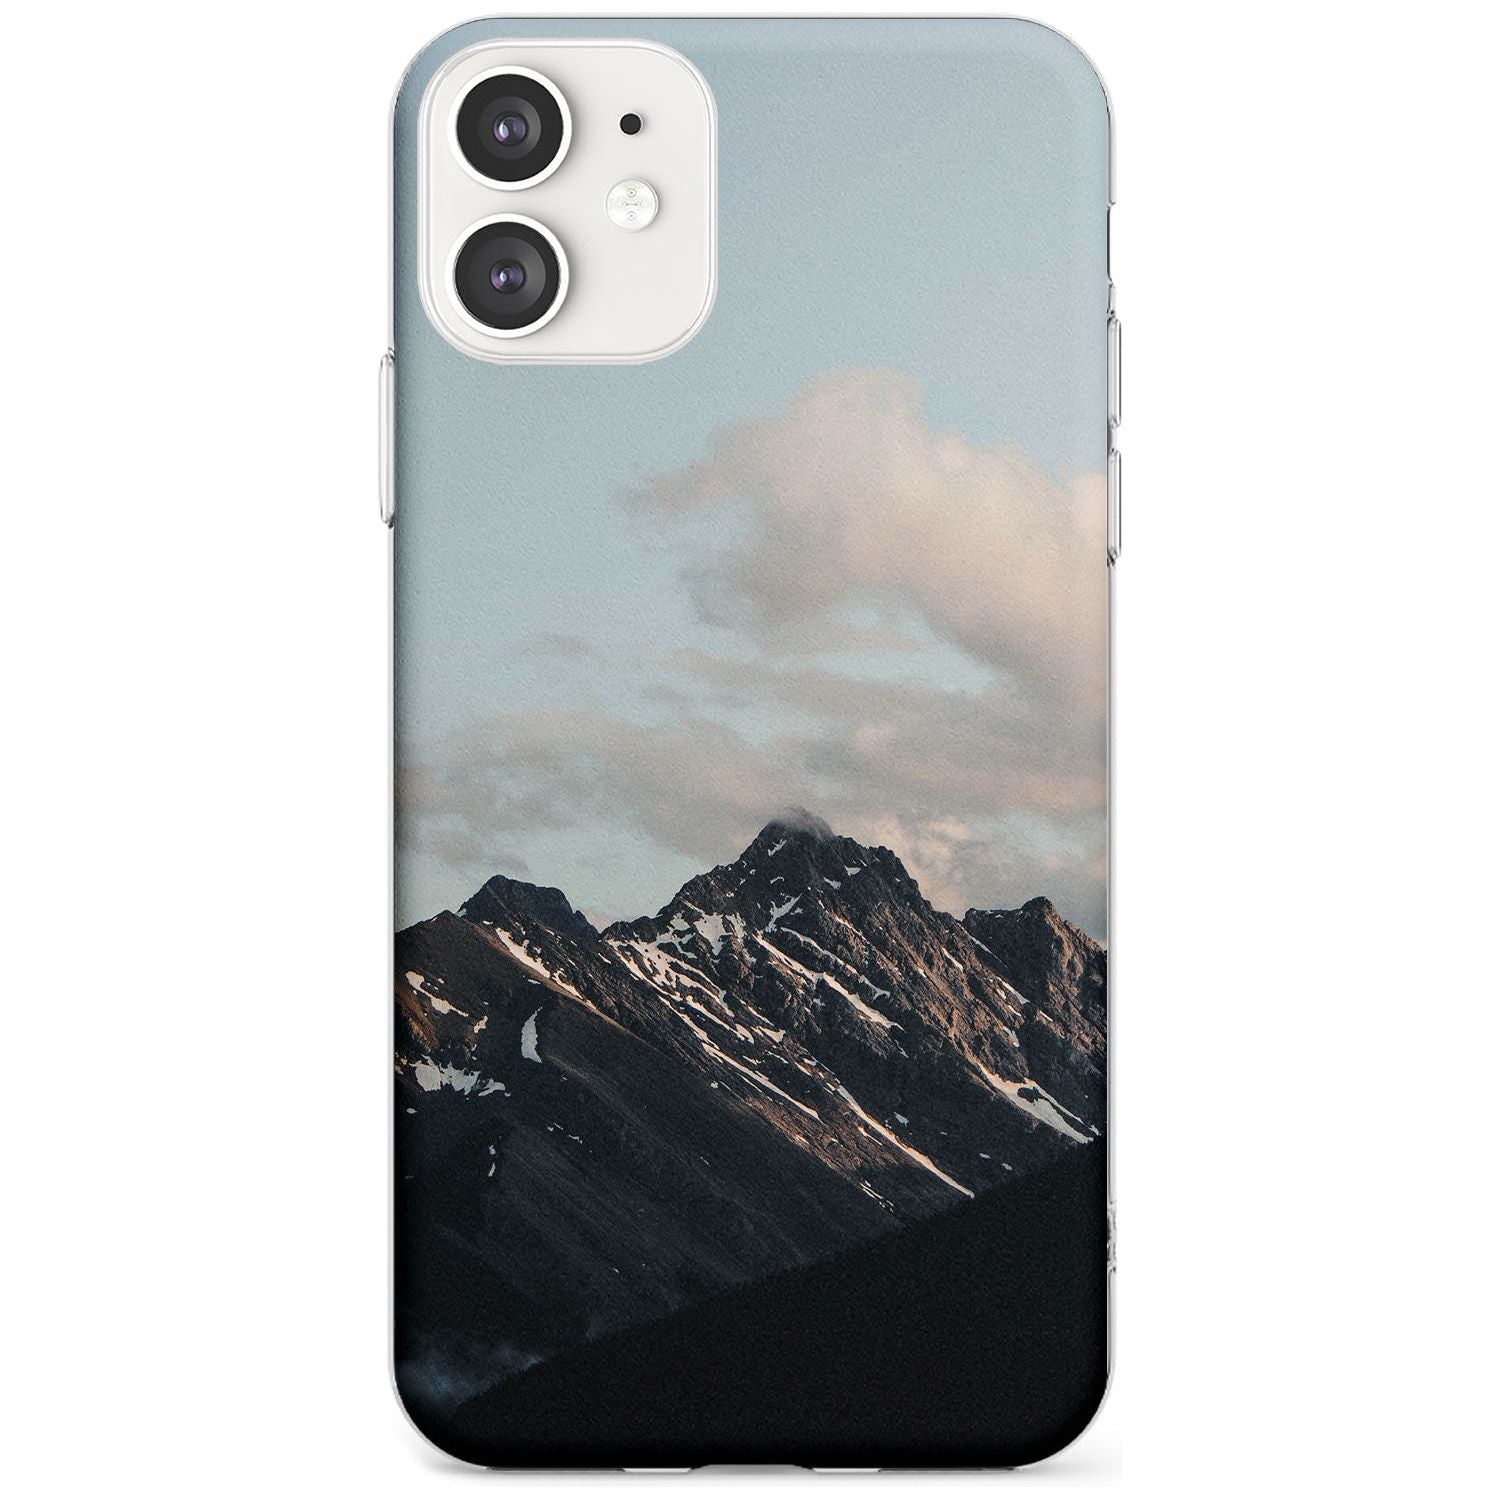 Mountain Range Photograph Slim TPU Phone Case for iPhone 11